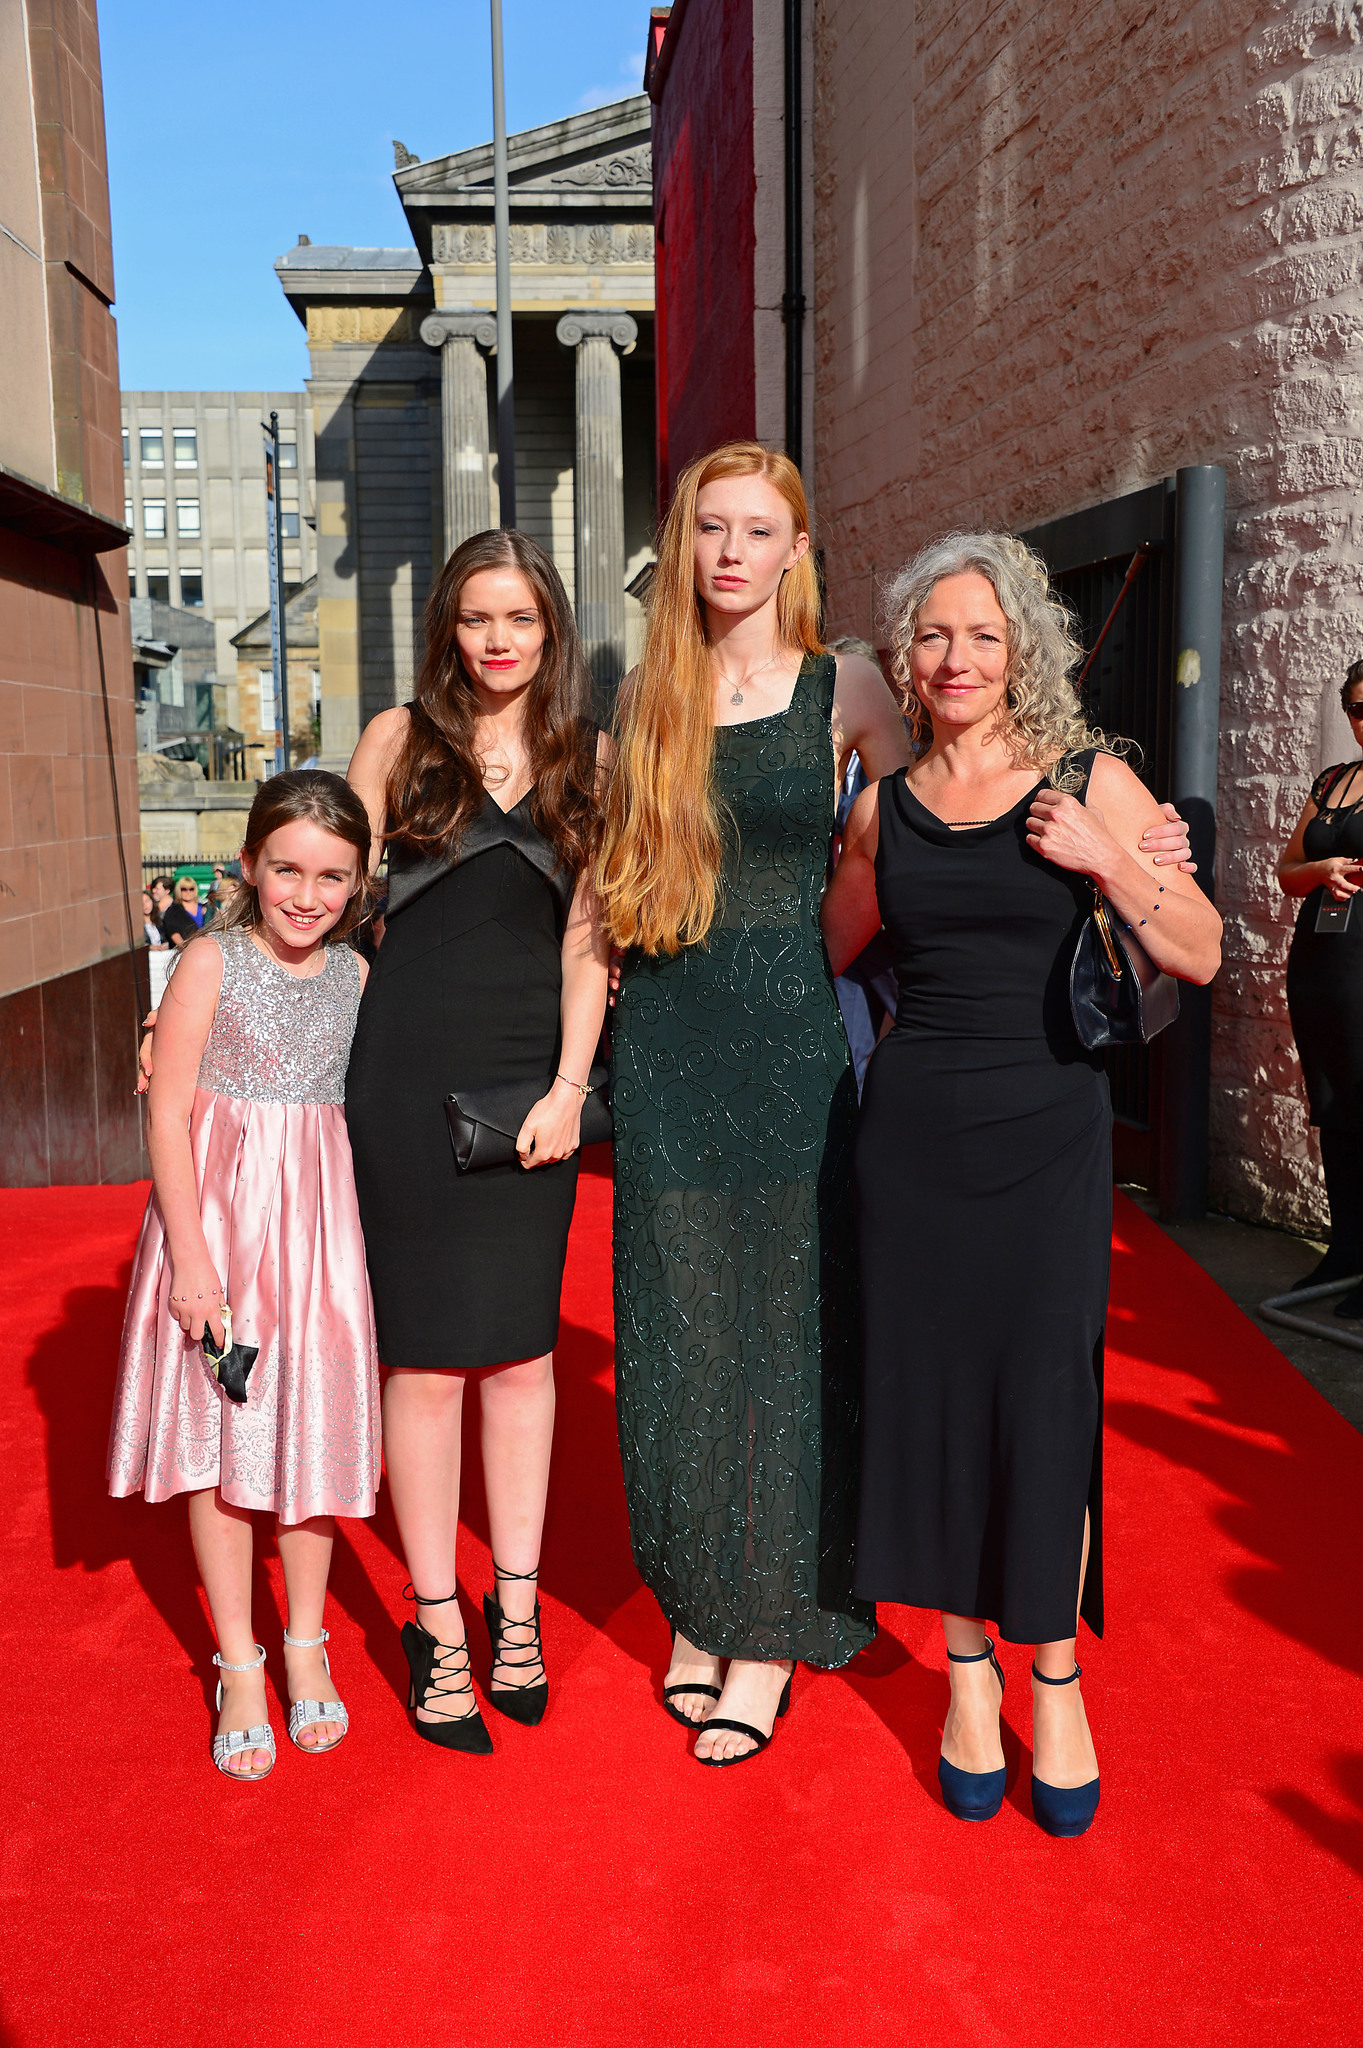 Seylan Baxter, Lynn Kennedy, Amber Rissmann and Kayla Fallon at event of Macbeth (2015)